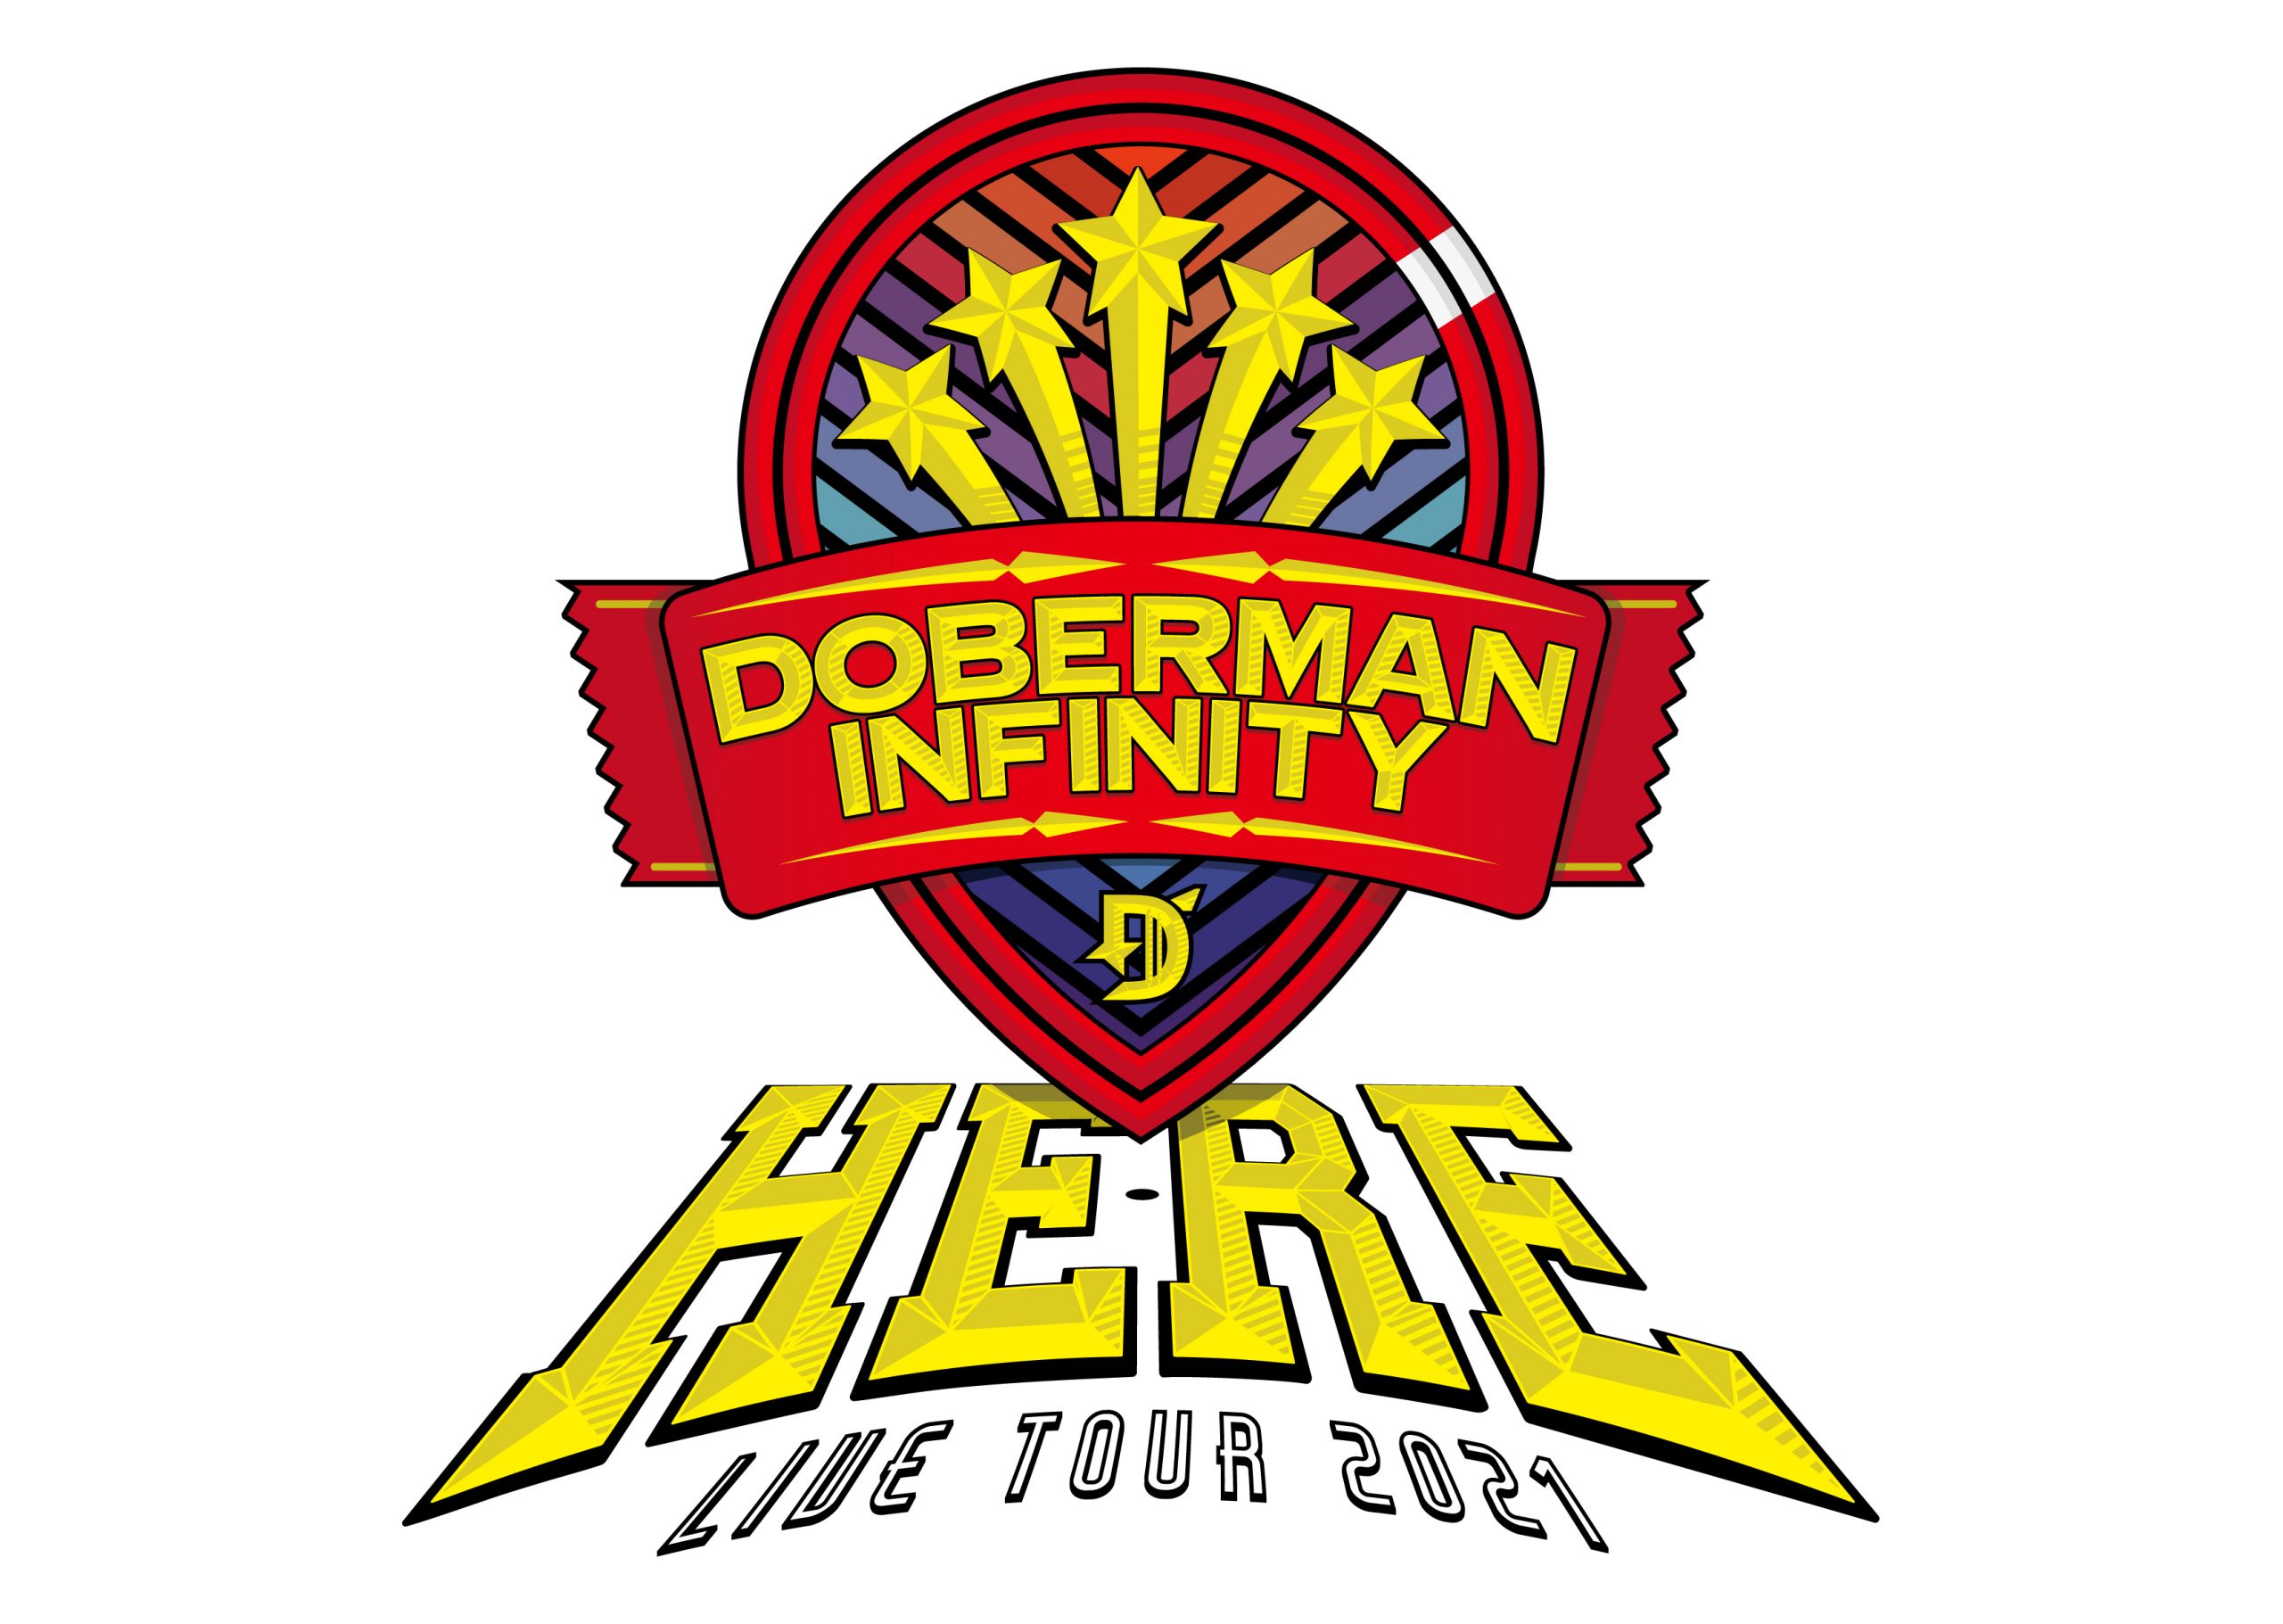 Doberman Infinity Live Tour 21 Here ロームシアター京都